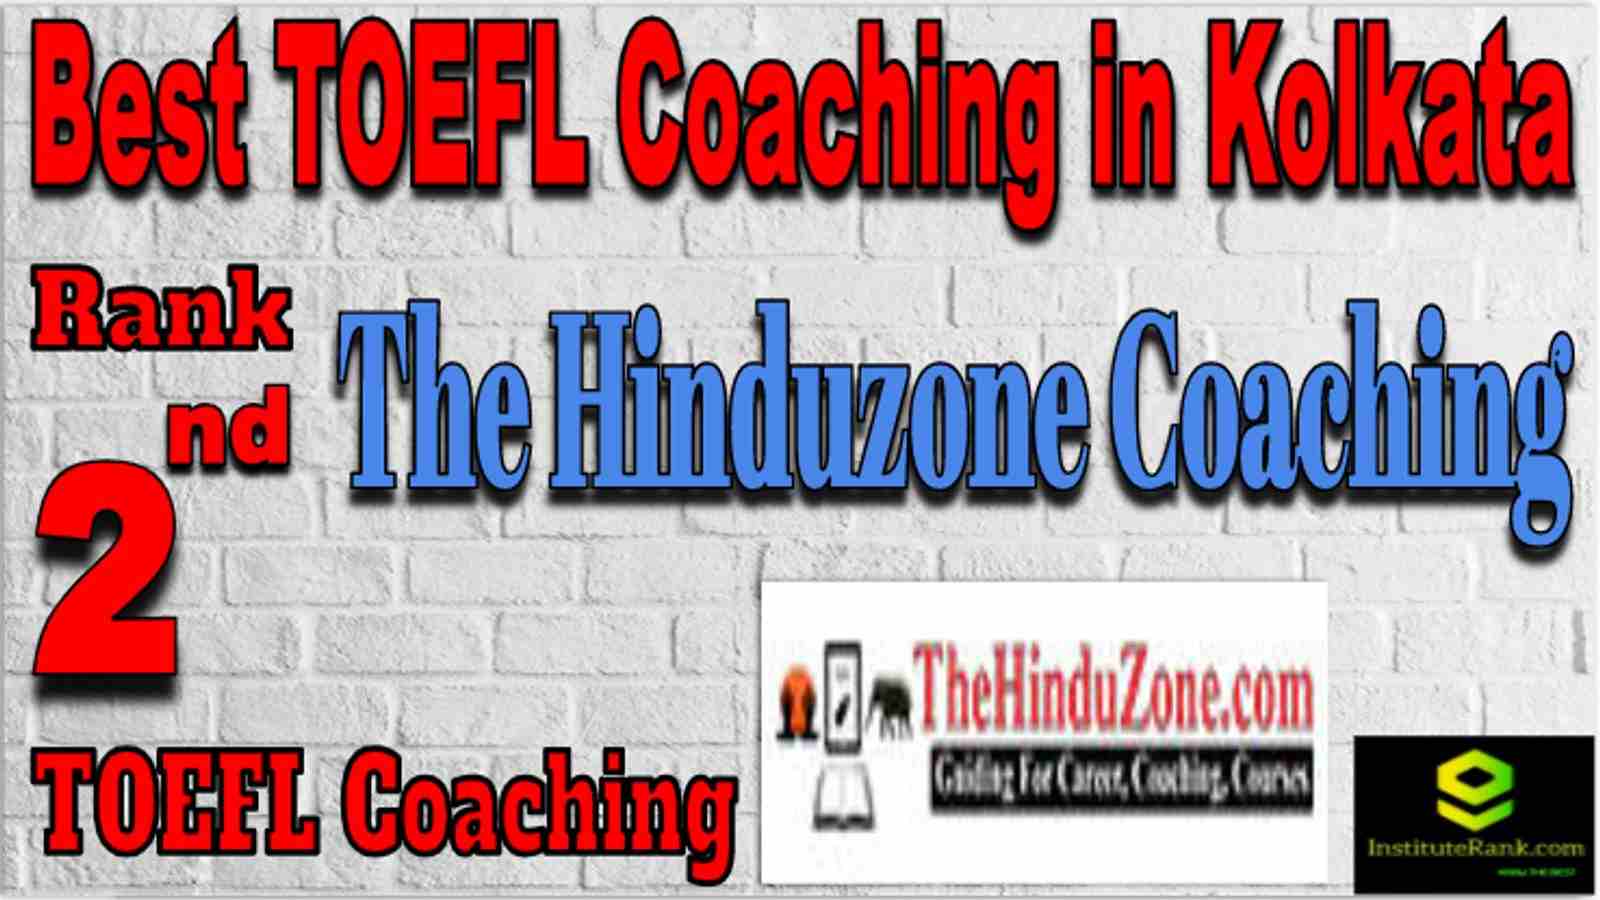 Rank 2 Best TOEFL Coaching in Kolkata